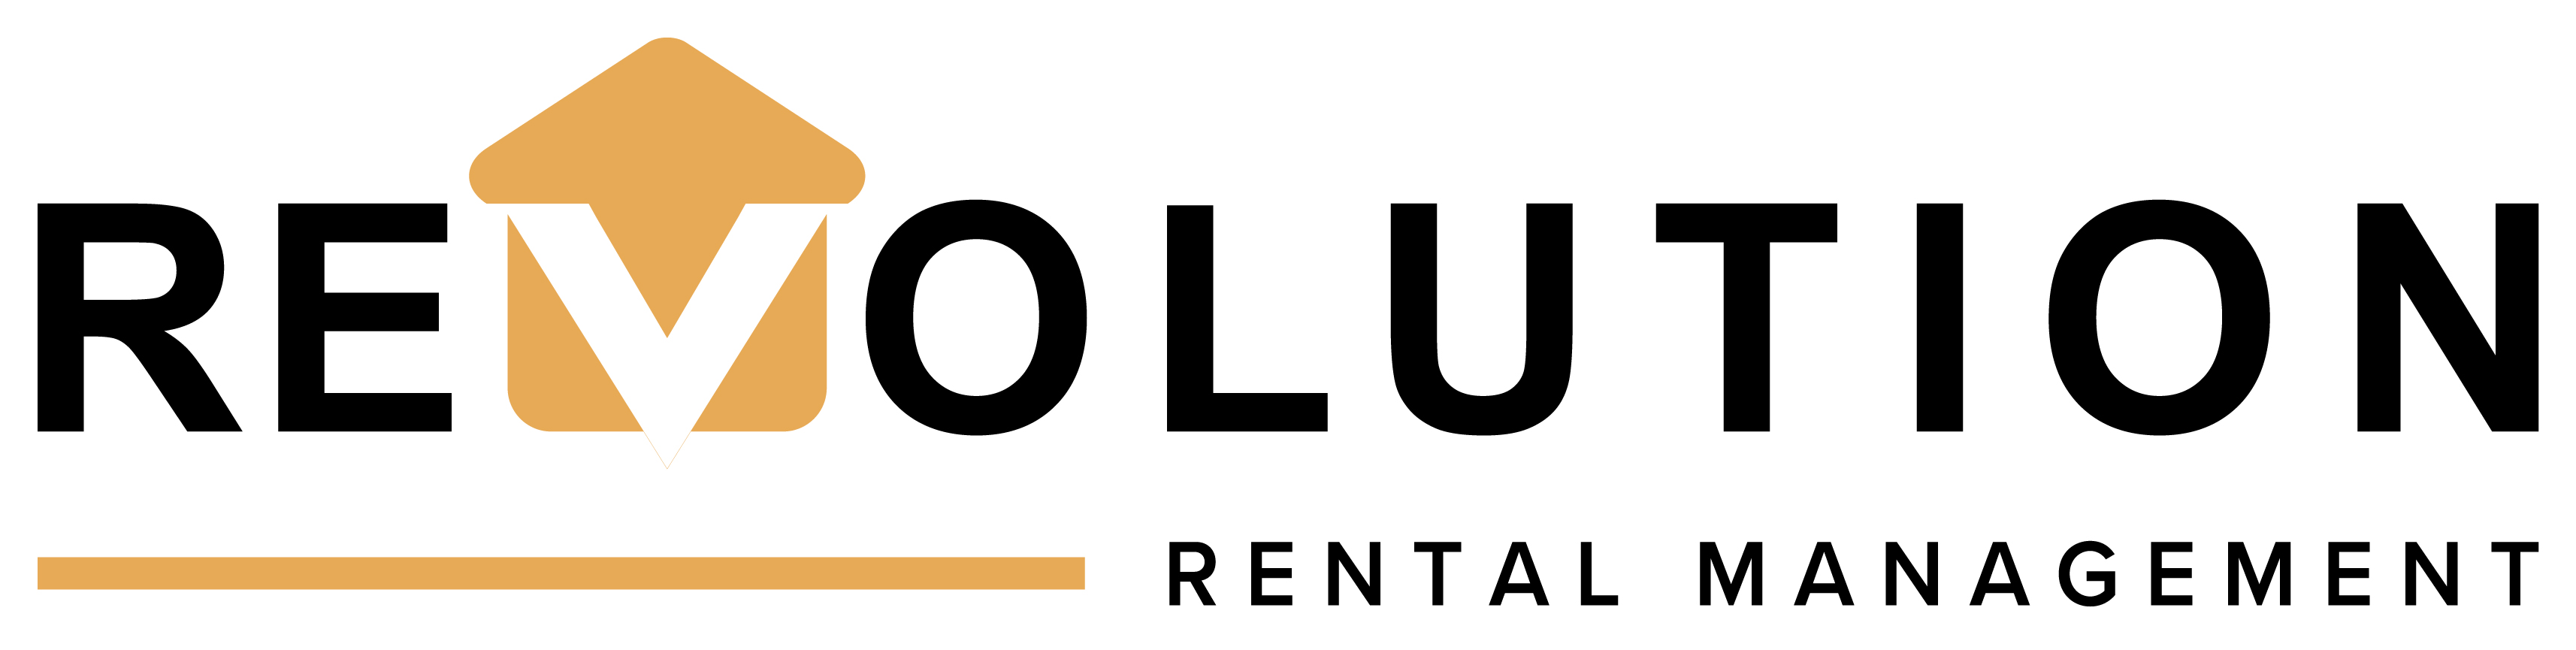 Revolution Rental Management - East Perimeter logo